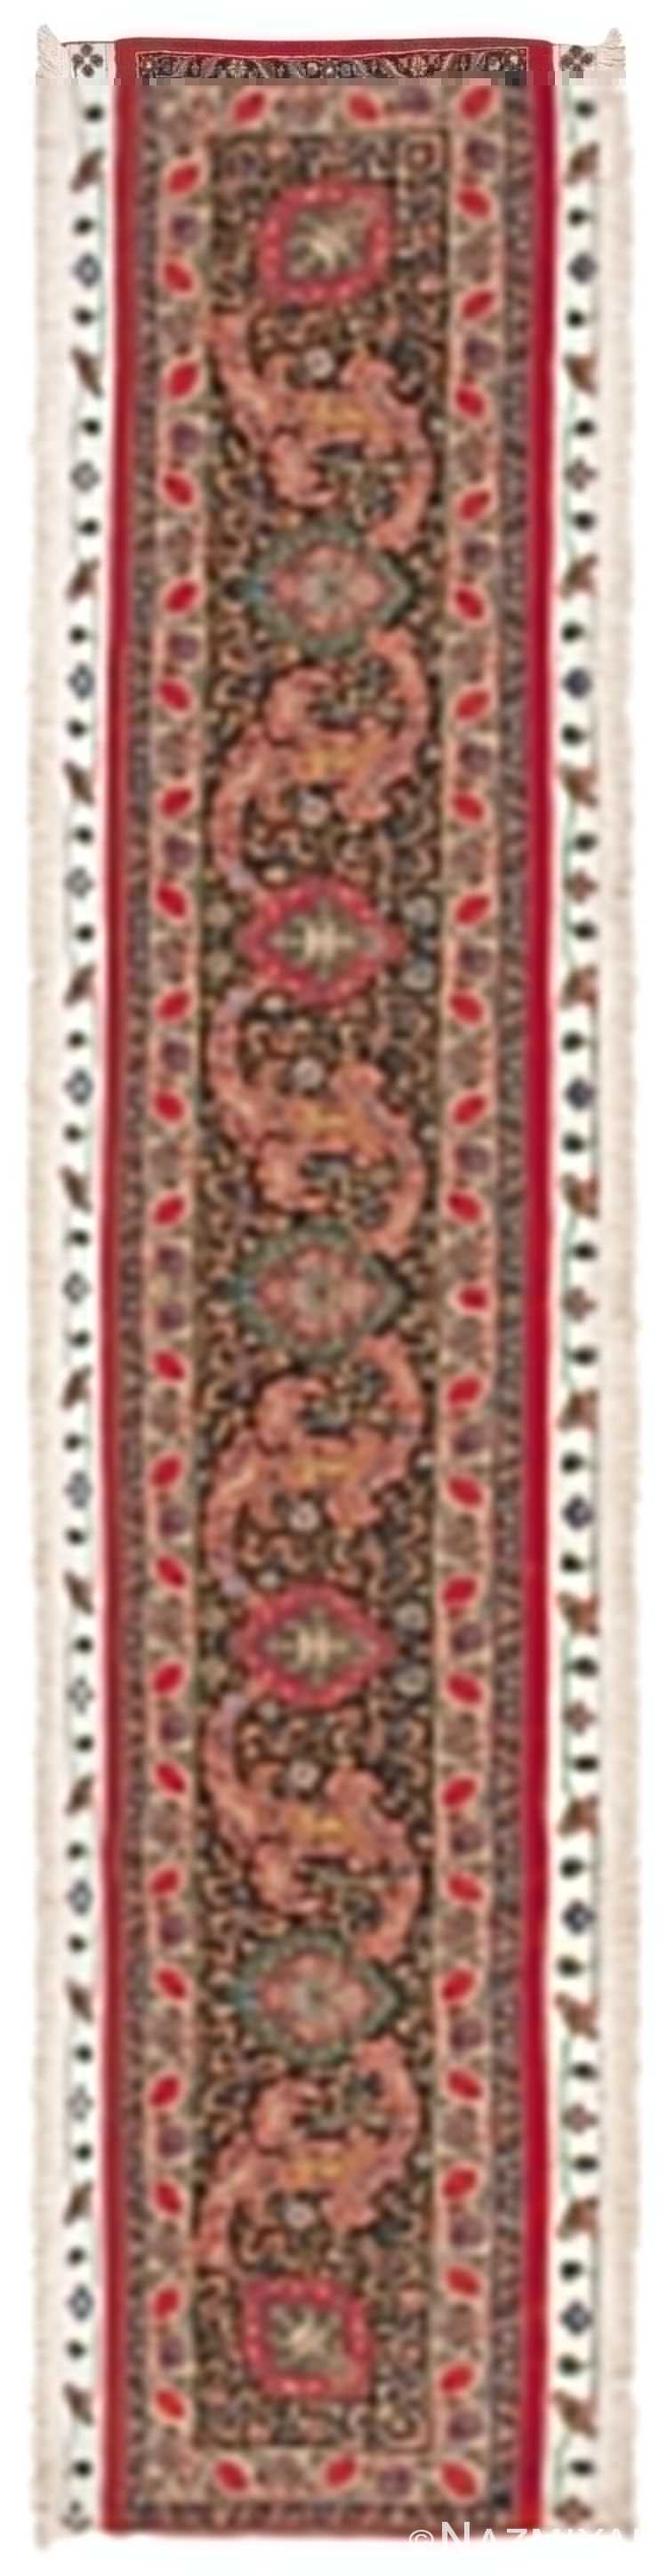 Tabriz Persian Rug 45238 Detail/Large View